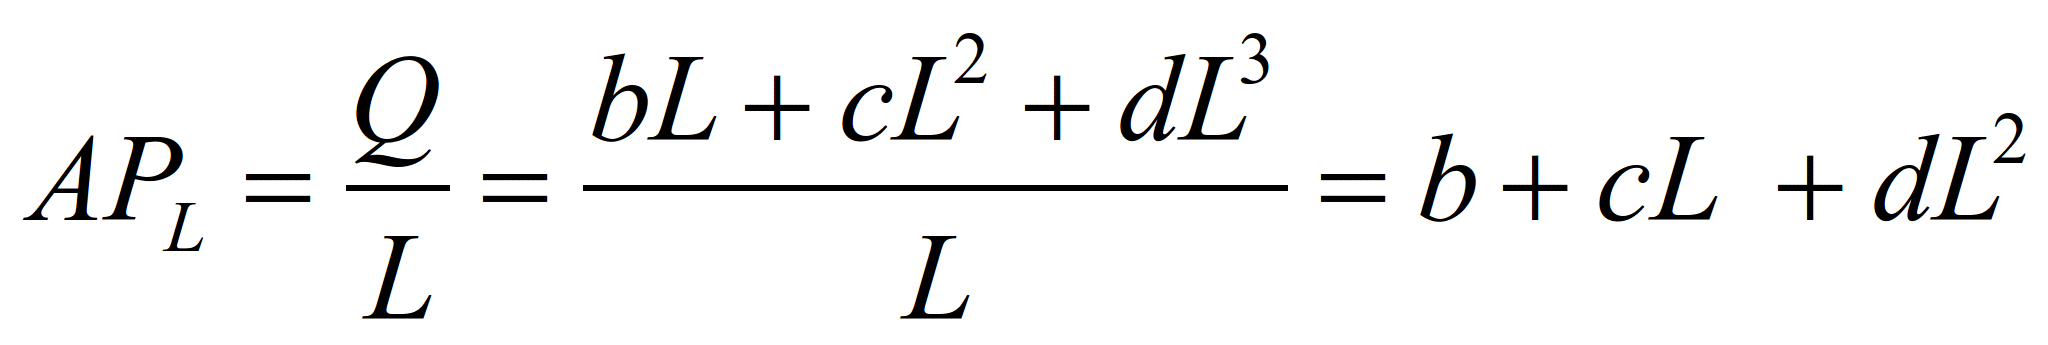 L максимальное формула. L предельное формула.